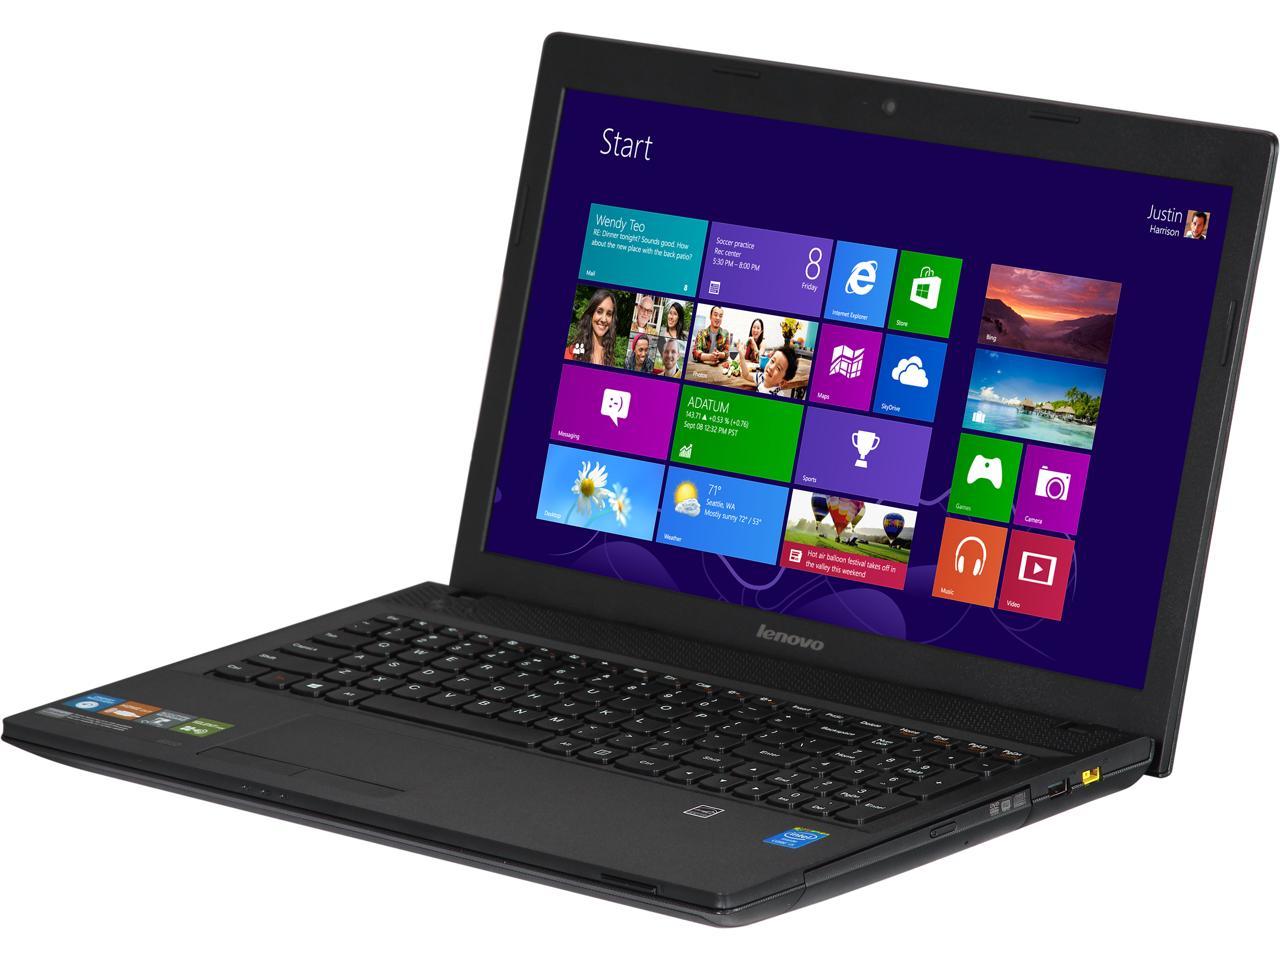 Lenovo Laptop IdeaPad G510 (59406709) Intel Core i5 4th Gen 4200M 